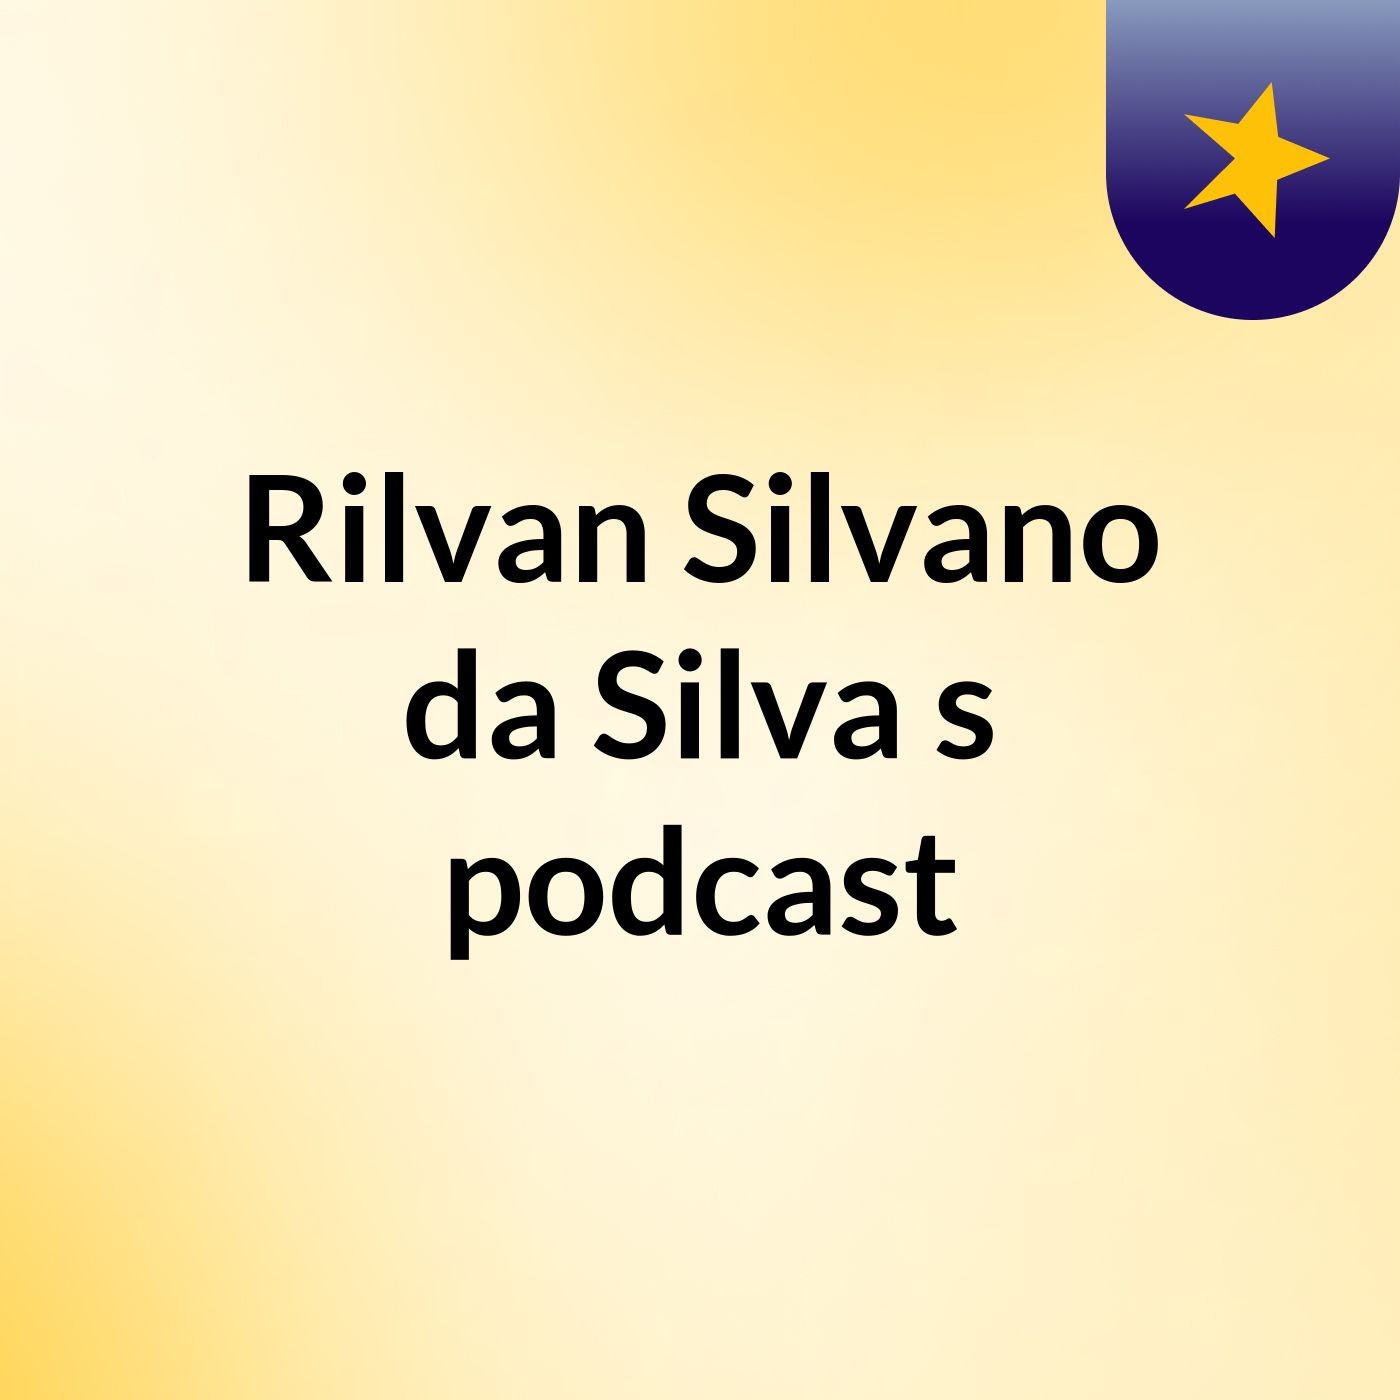 Rilvan Silvano da Silva's podcast